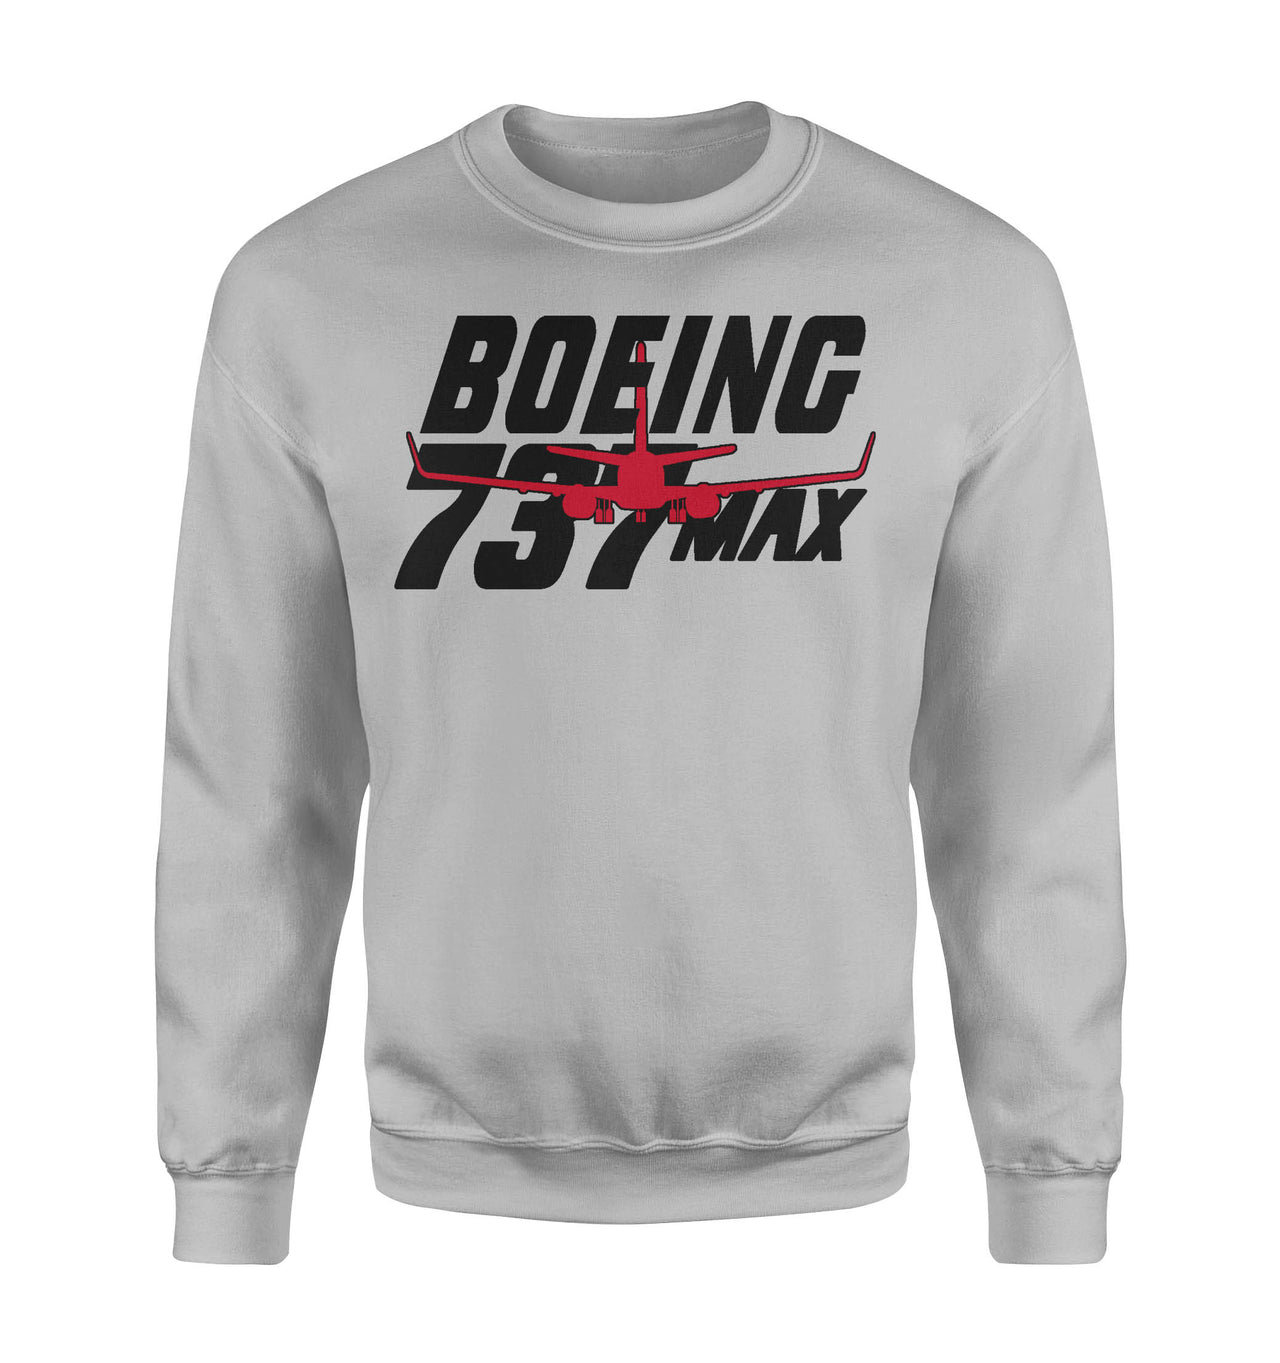 Amazing Boeing 737Max Designed Sweatshirts